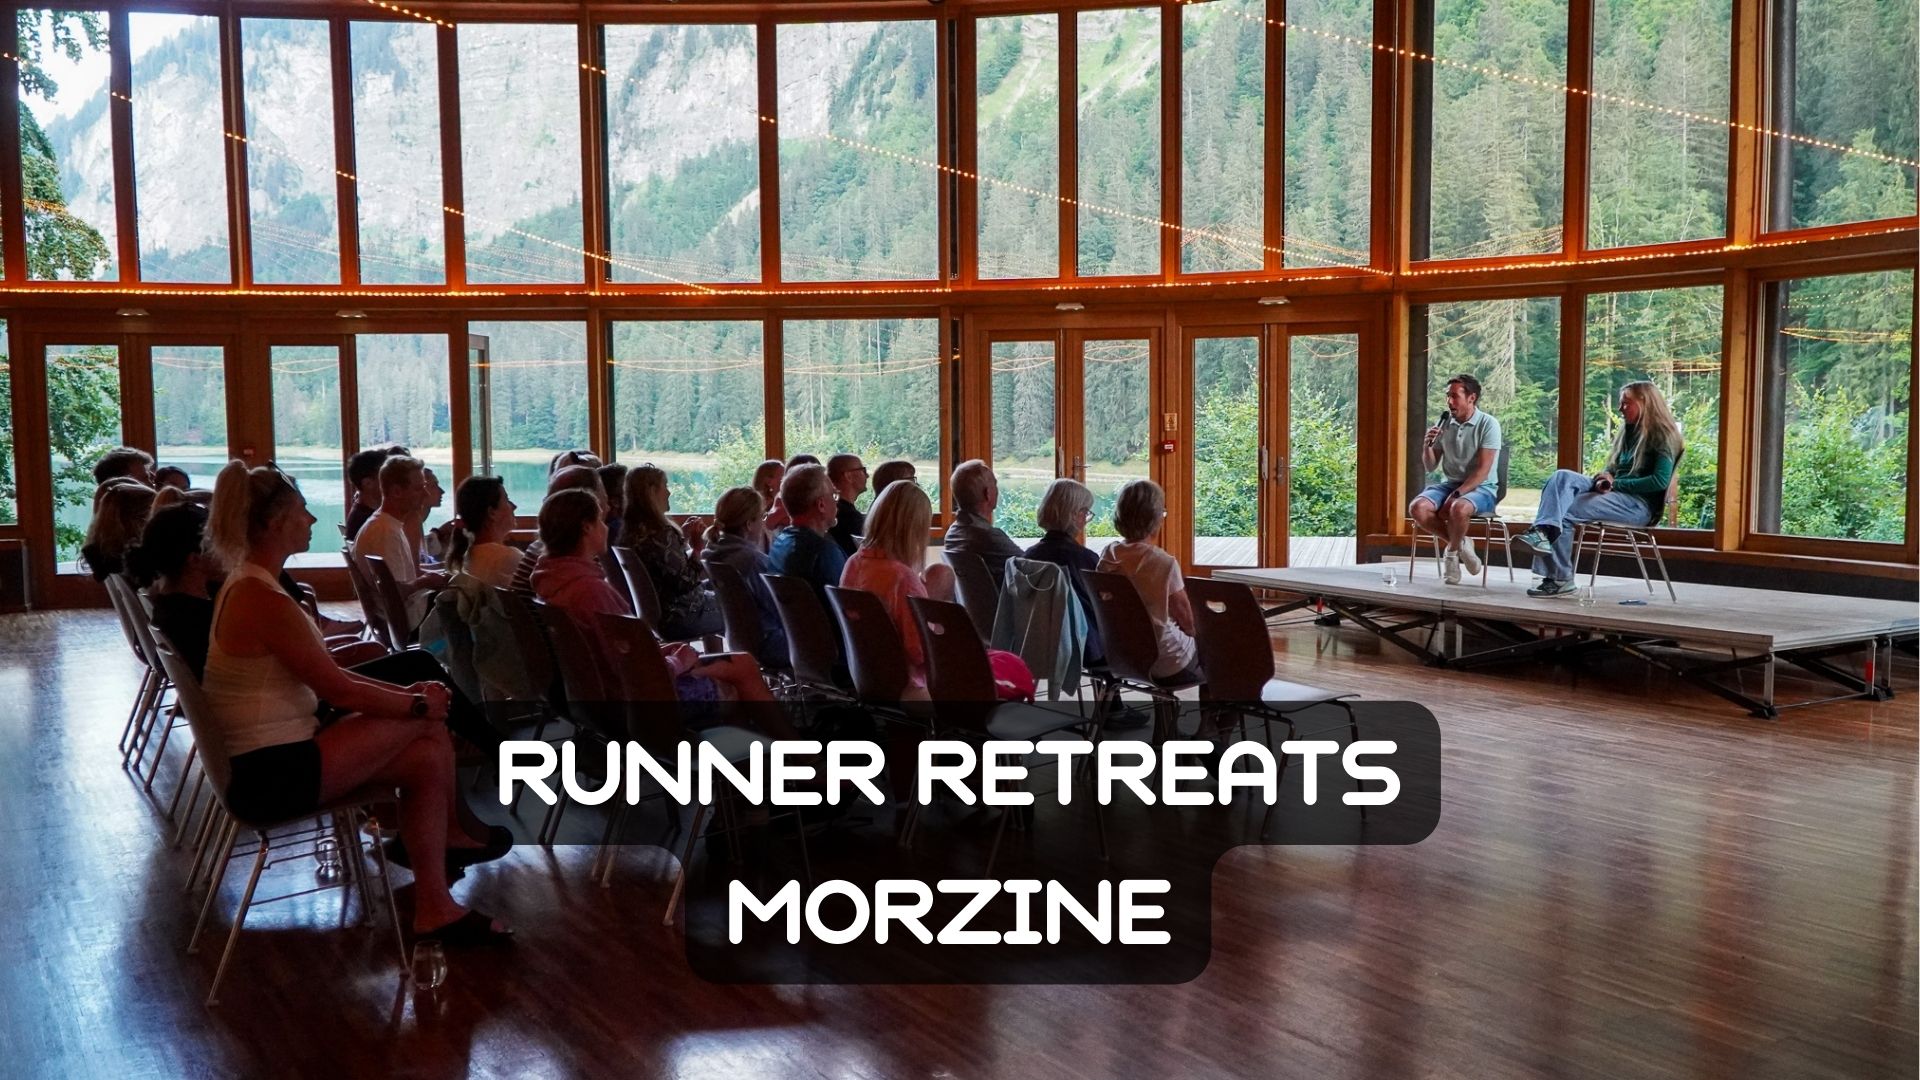 Morzine Runner Retreats